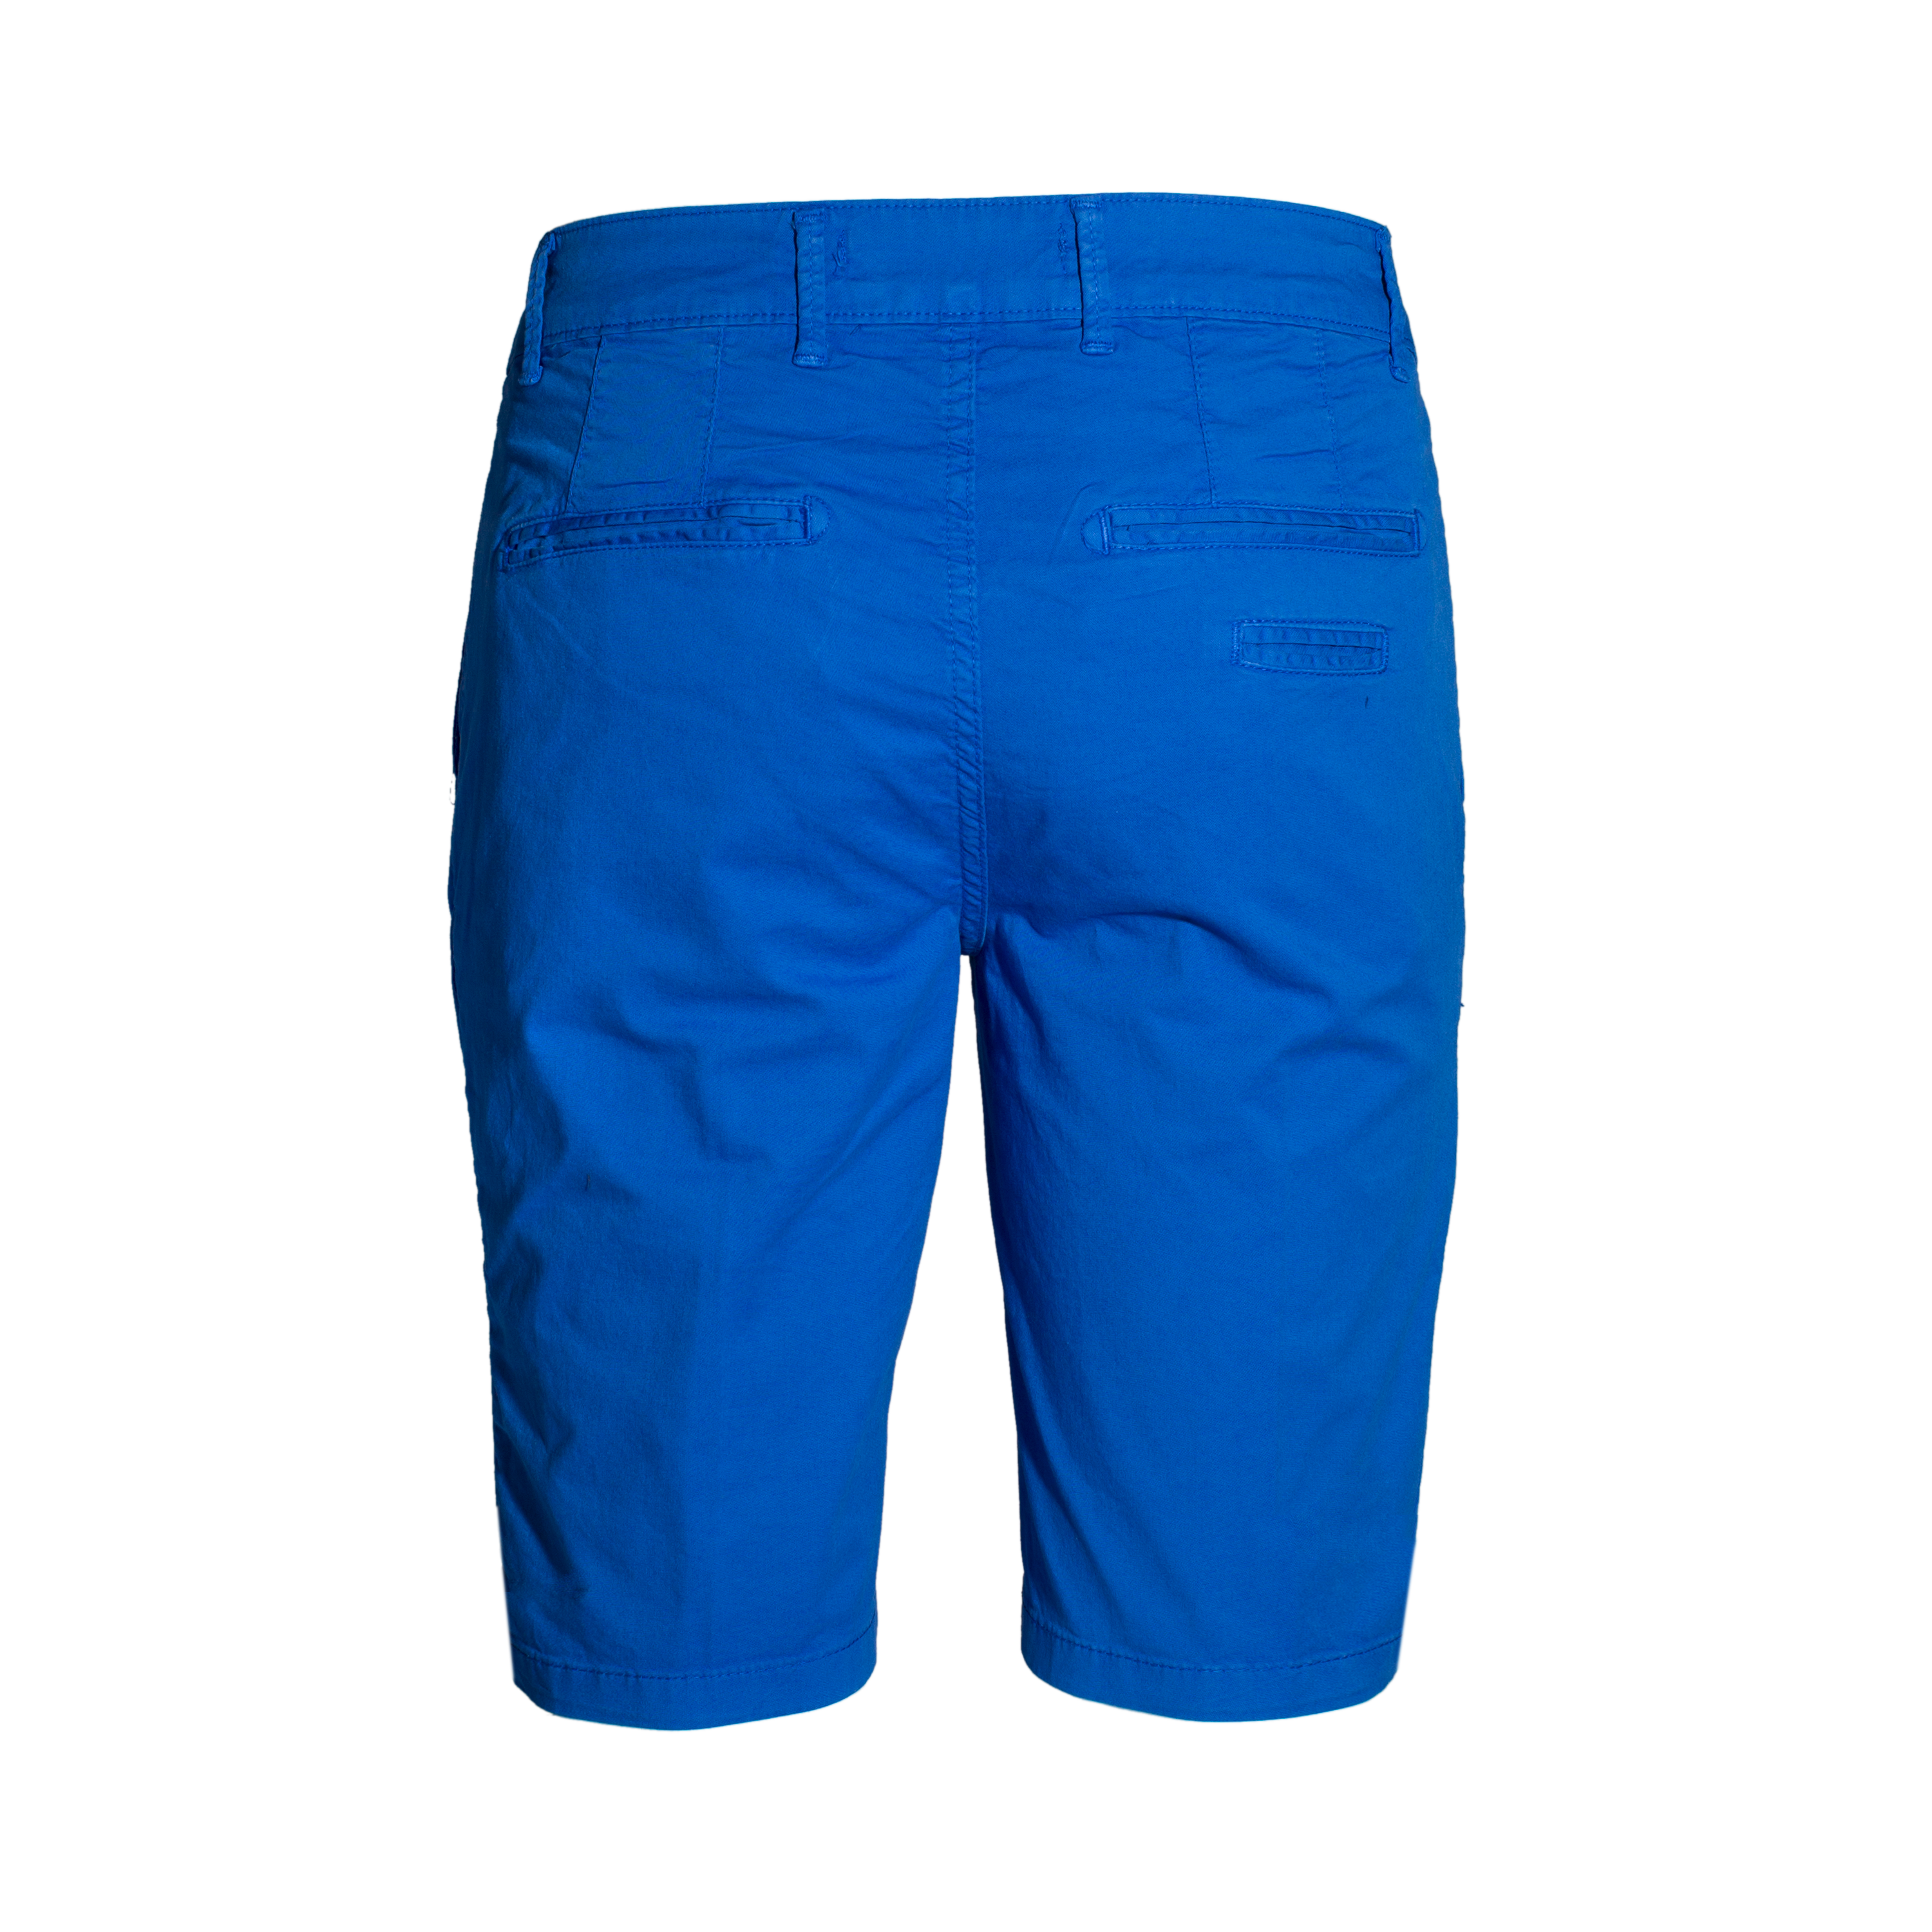 Bermuda Uomo In Cotone Blu Royal Pantaloncini tinta unita